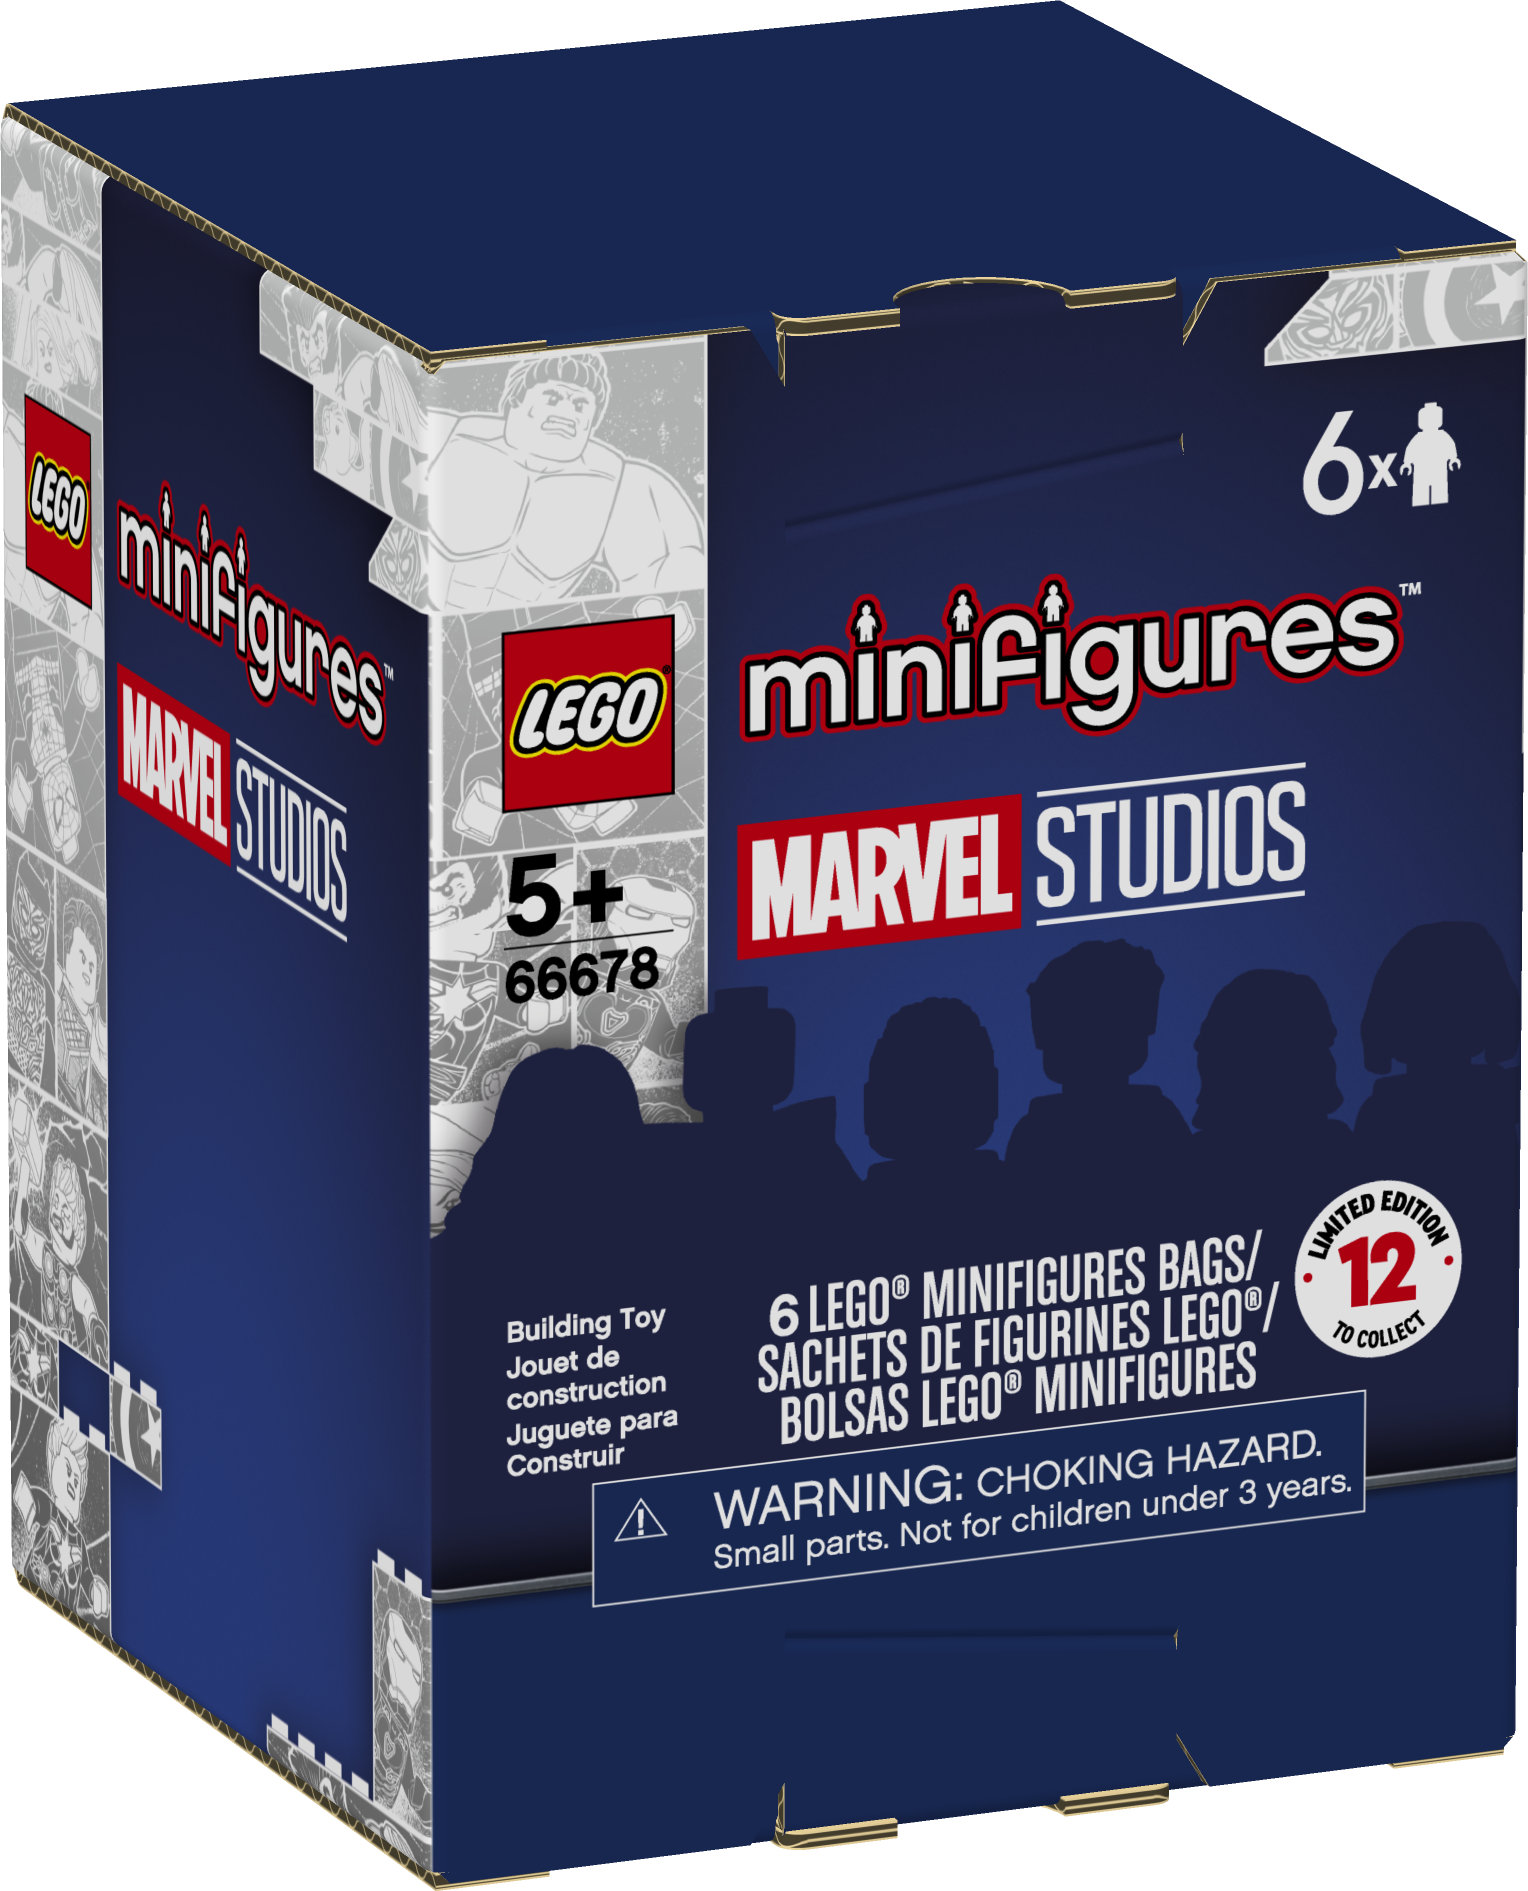 NIB LEGO Minifigures Marvel Studios Wave 3~6 Pack~#66678~Limited Edition 66678 